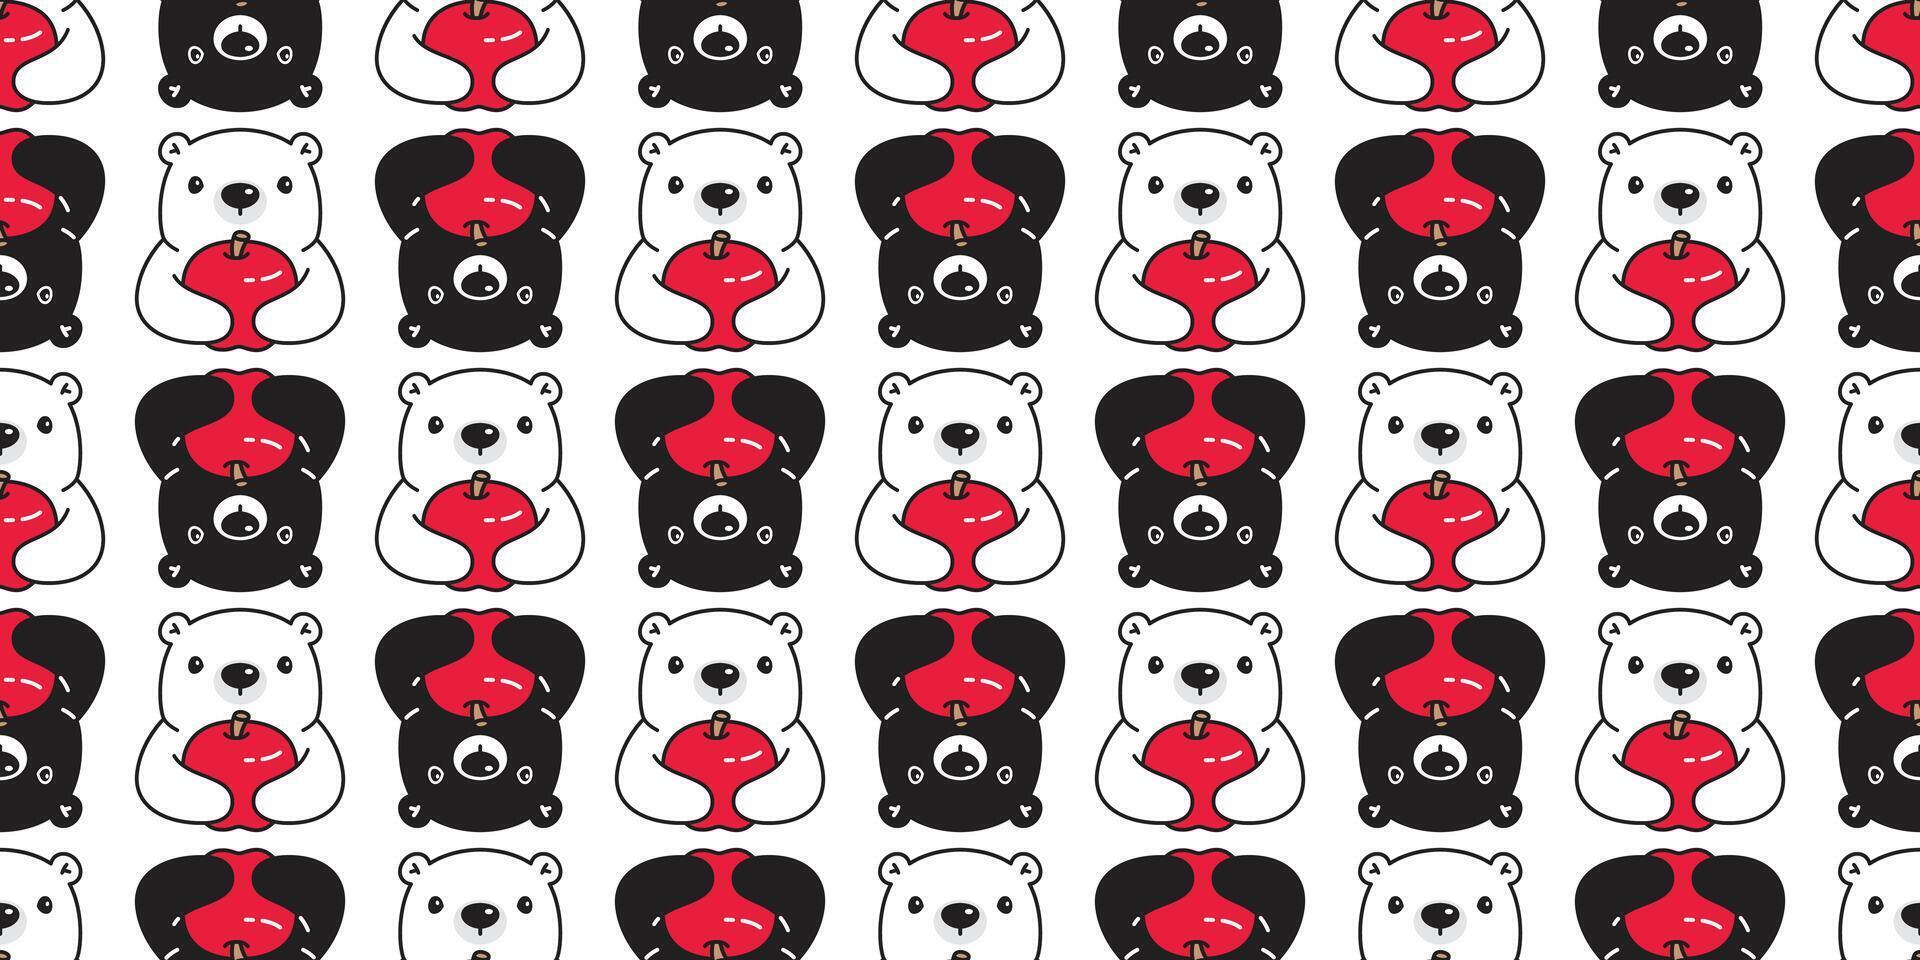 Bear seamless pattern polar bear vector apple scarf isolated cartoon tile background repeat wallpaper illustration design